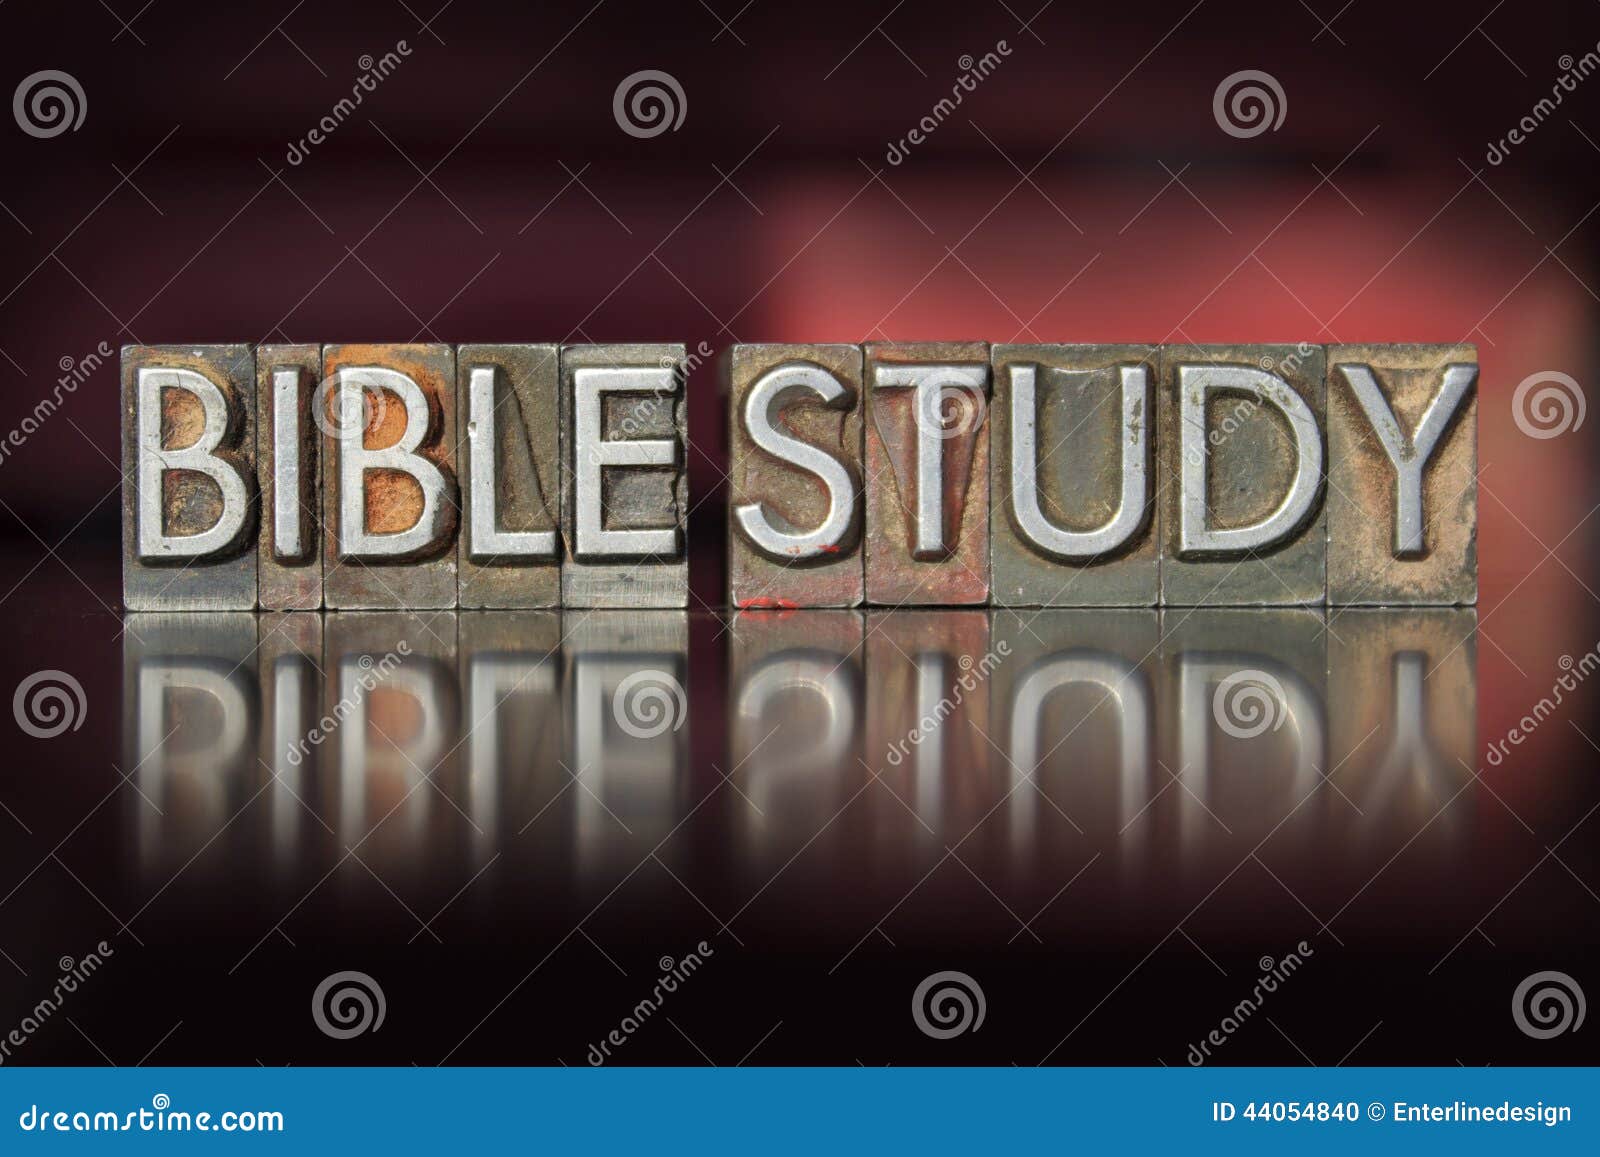 bible study letterpress